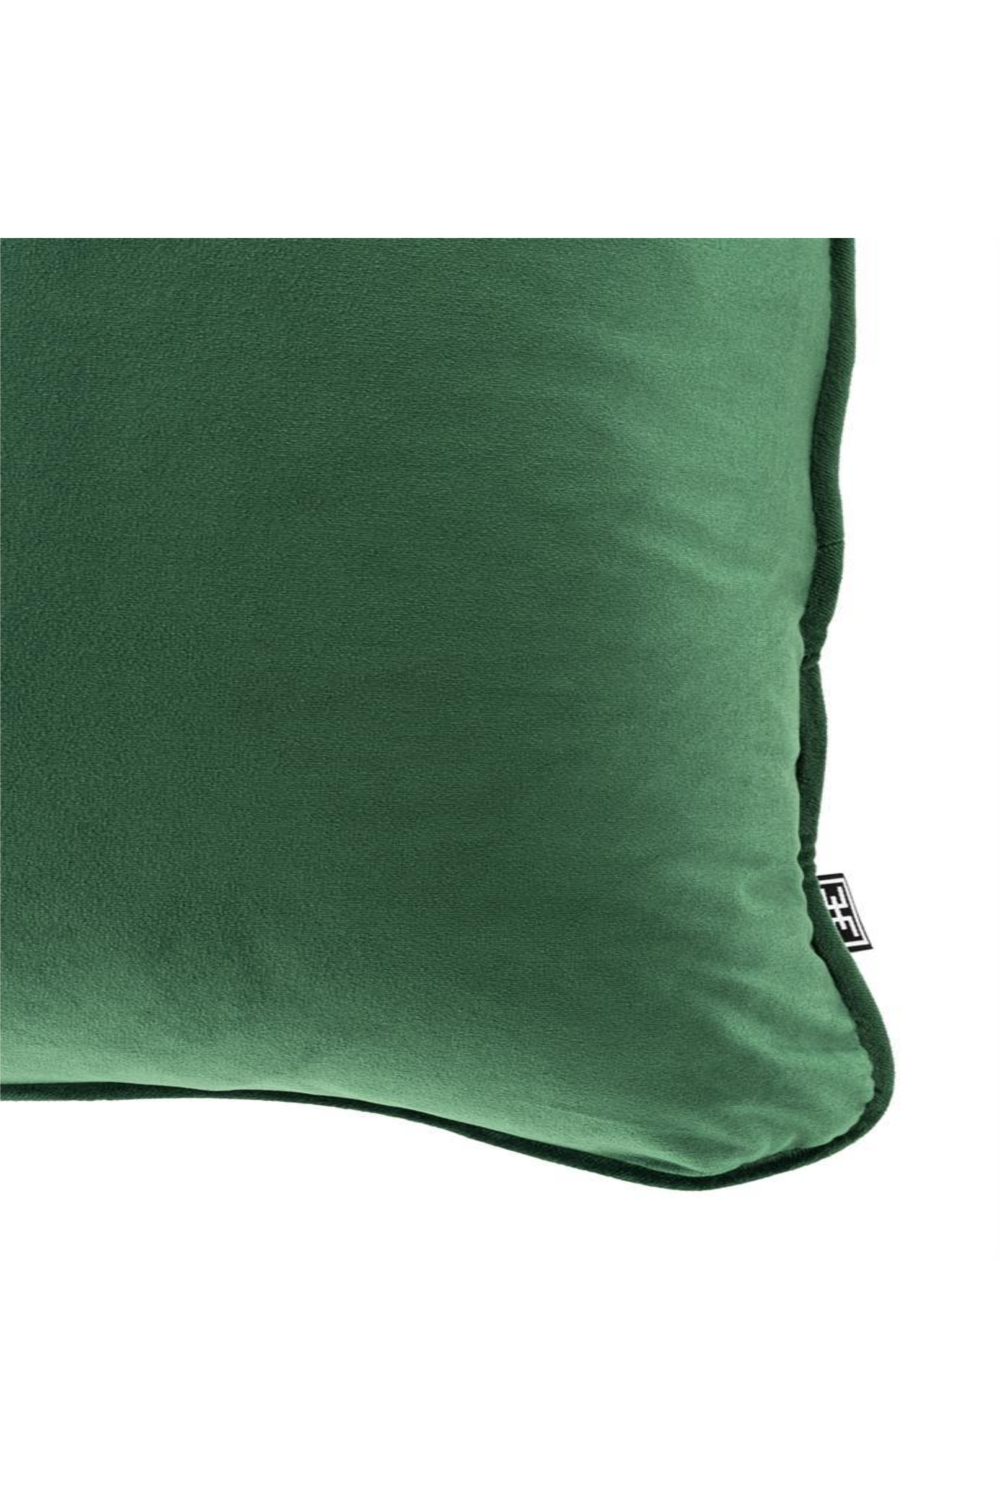 Square Green Velvet Pillow | Eichholtz Roche | OROA